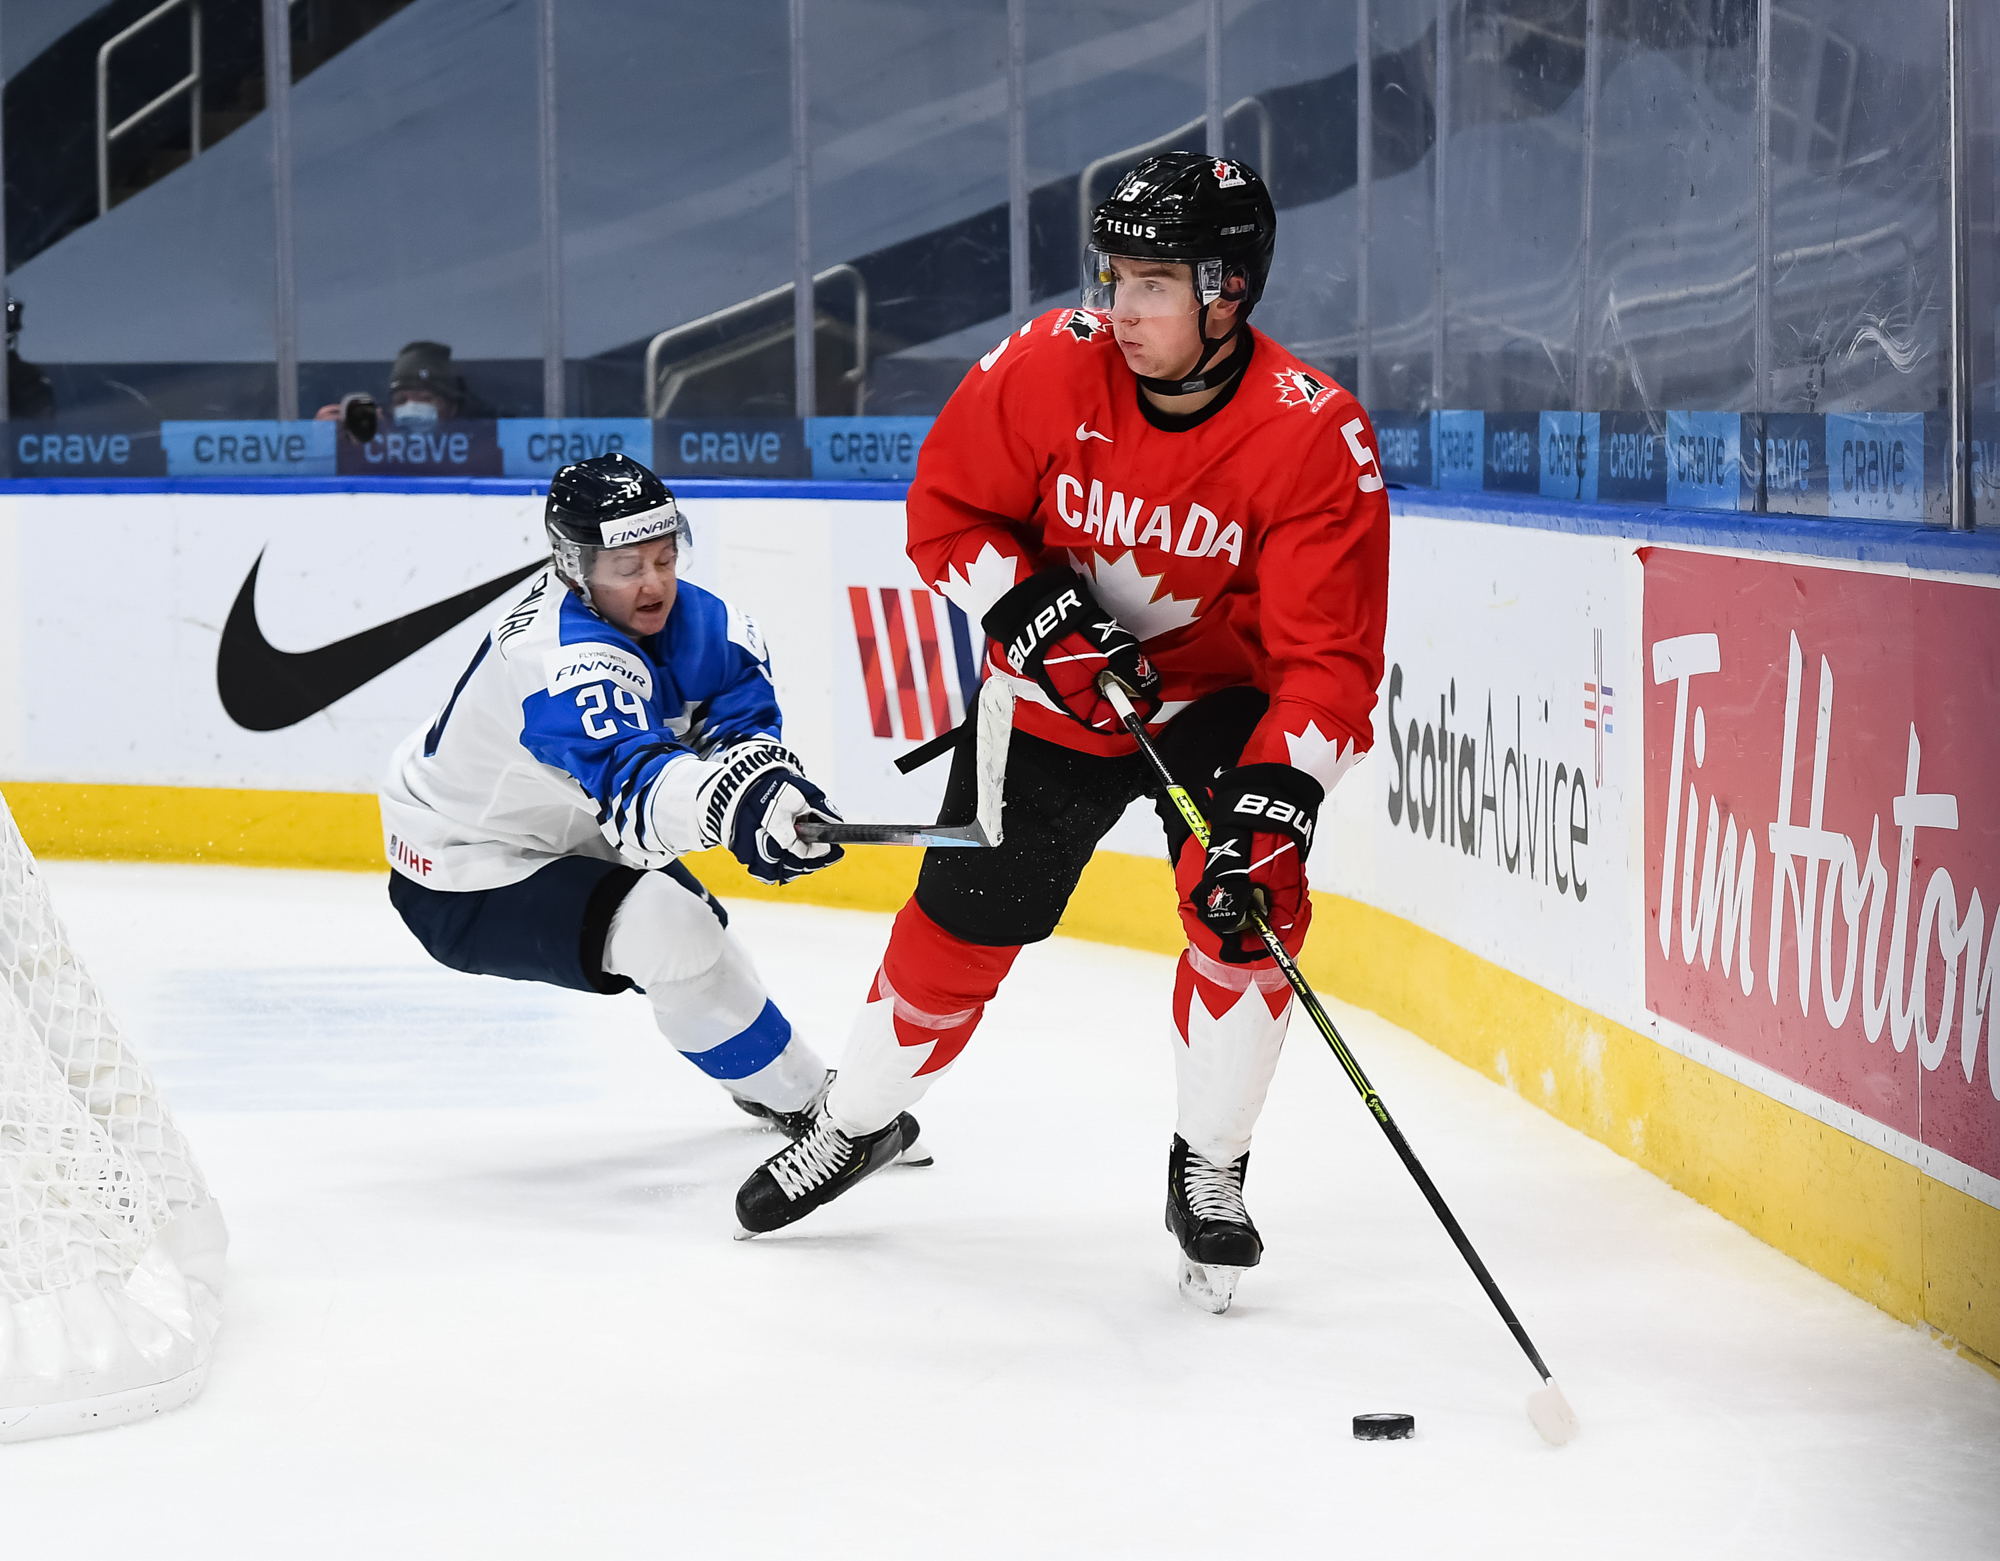 IIHF - Gallery: Canada vs Finland - 2021 IIHF World Junior ...